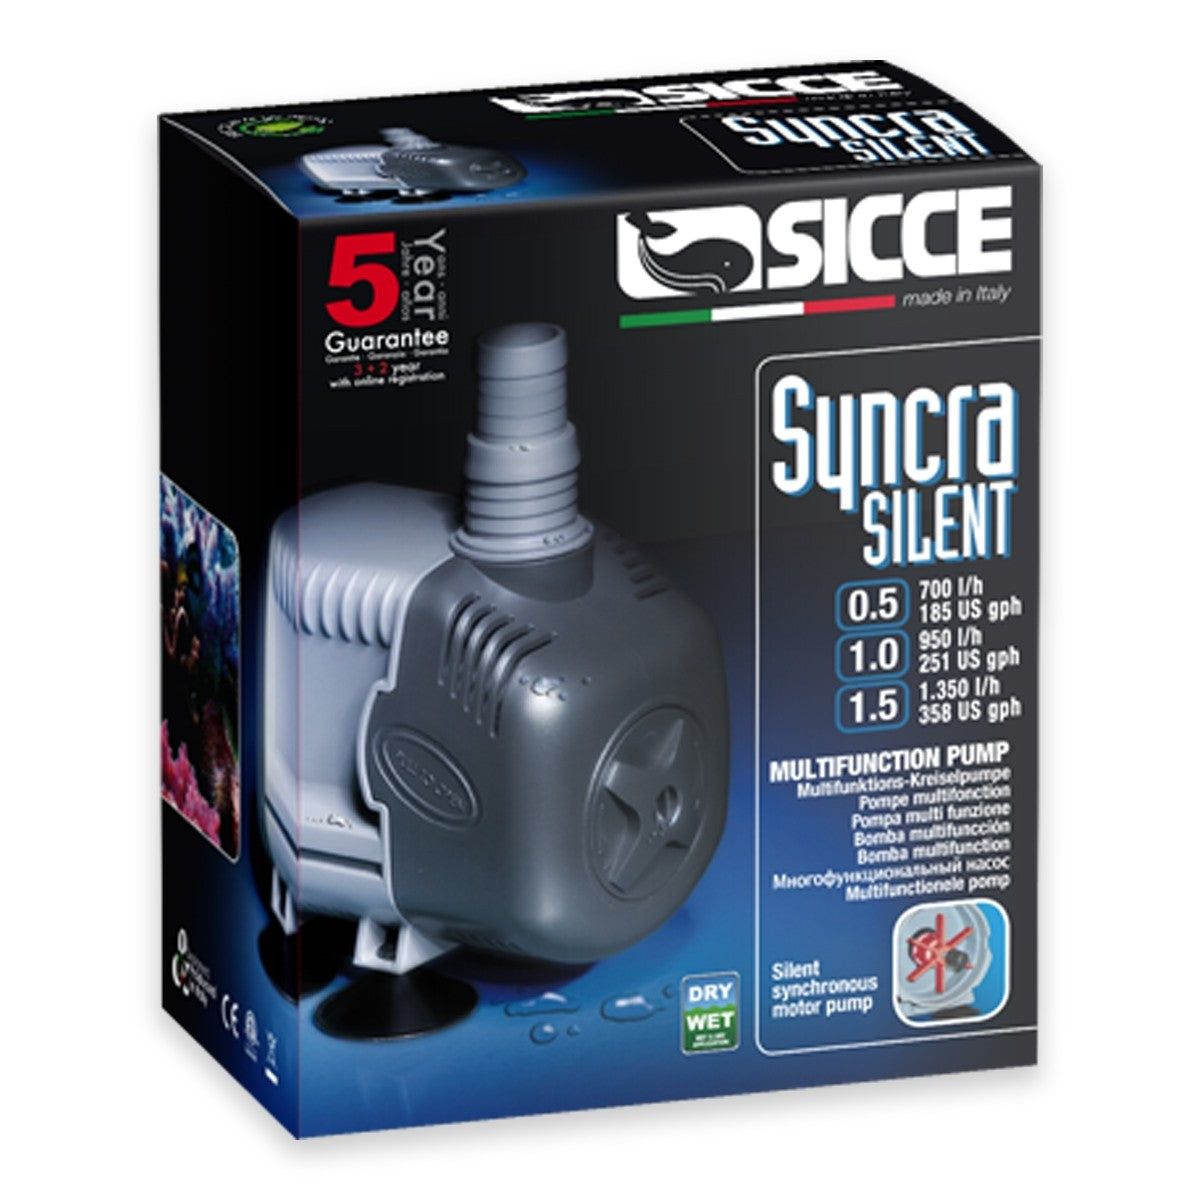 Syncra Pump 1.0 - 950l/h